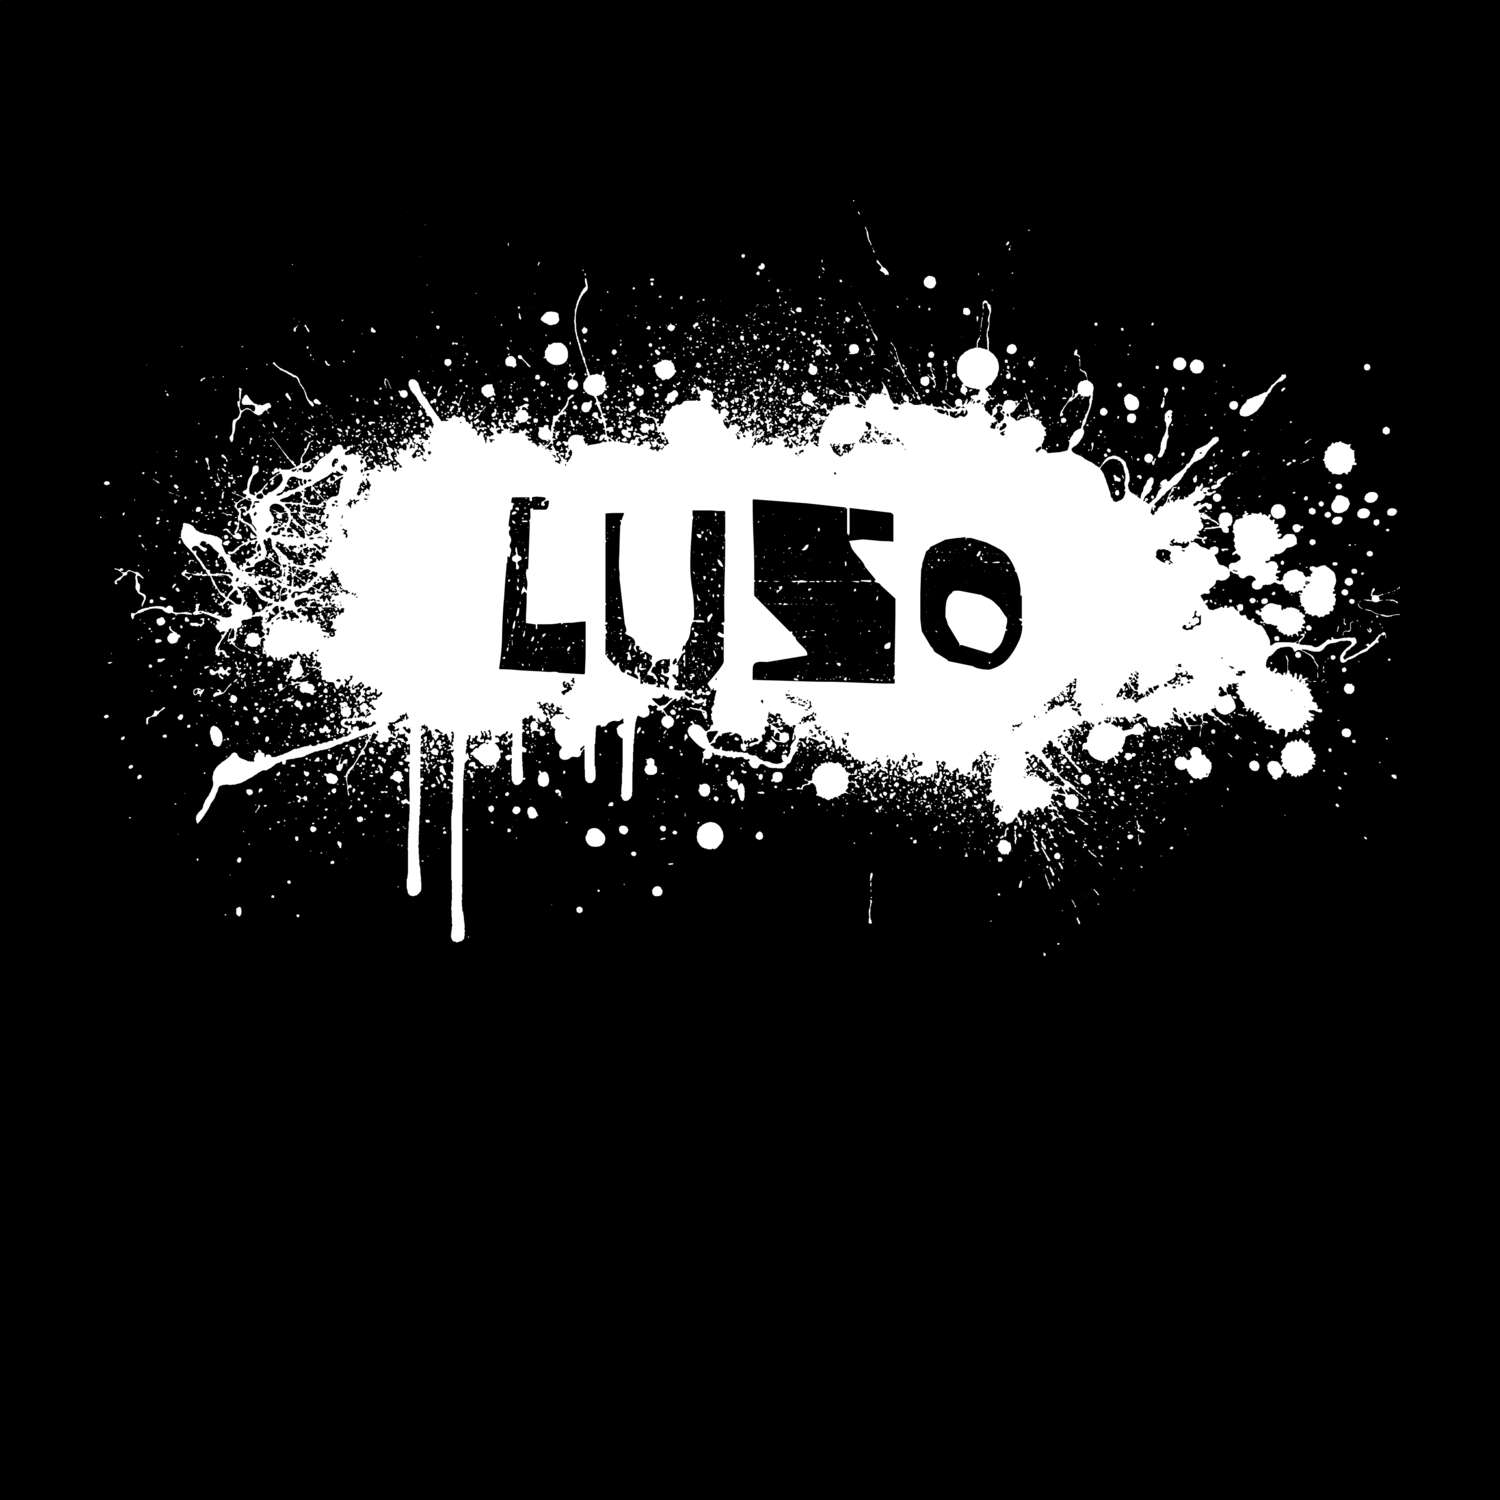 Luso T-Shirt »Paint Splash Punk«